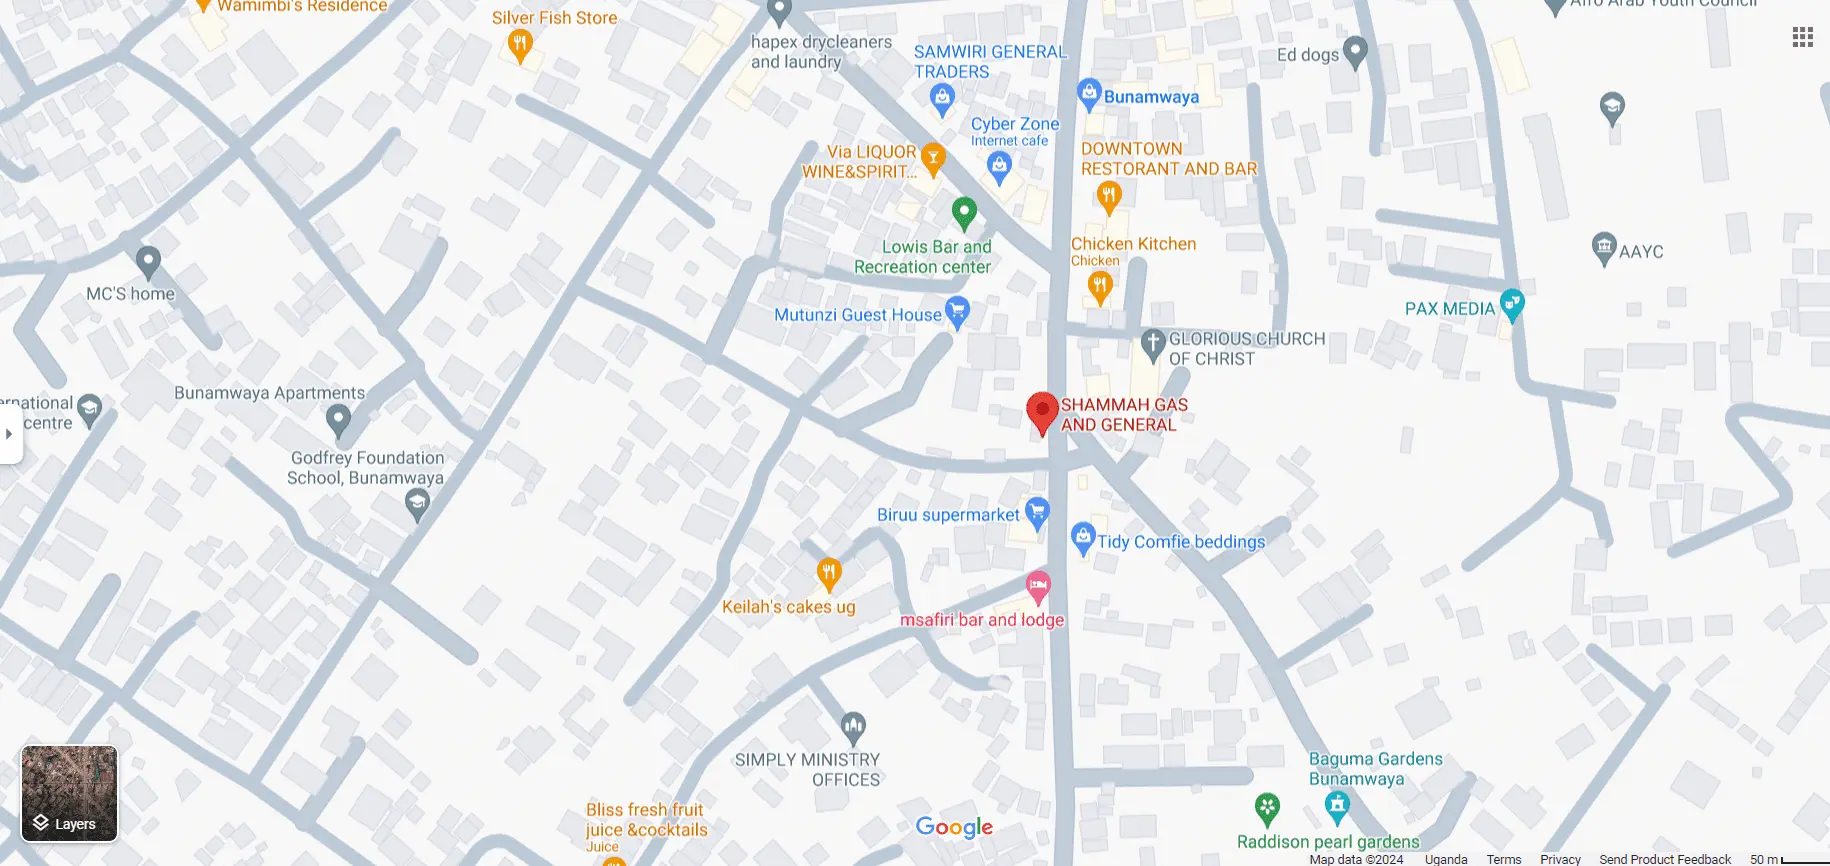 google maps location for shammah gas